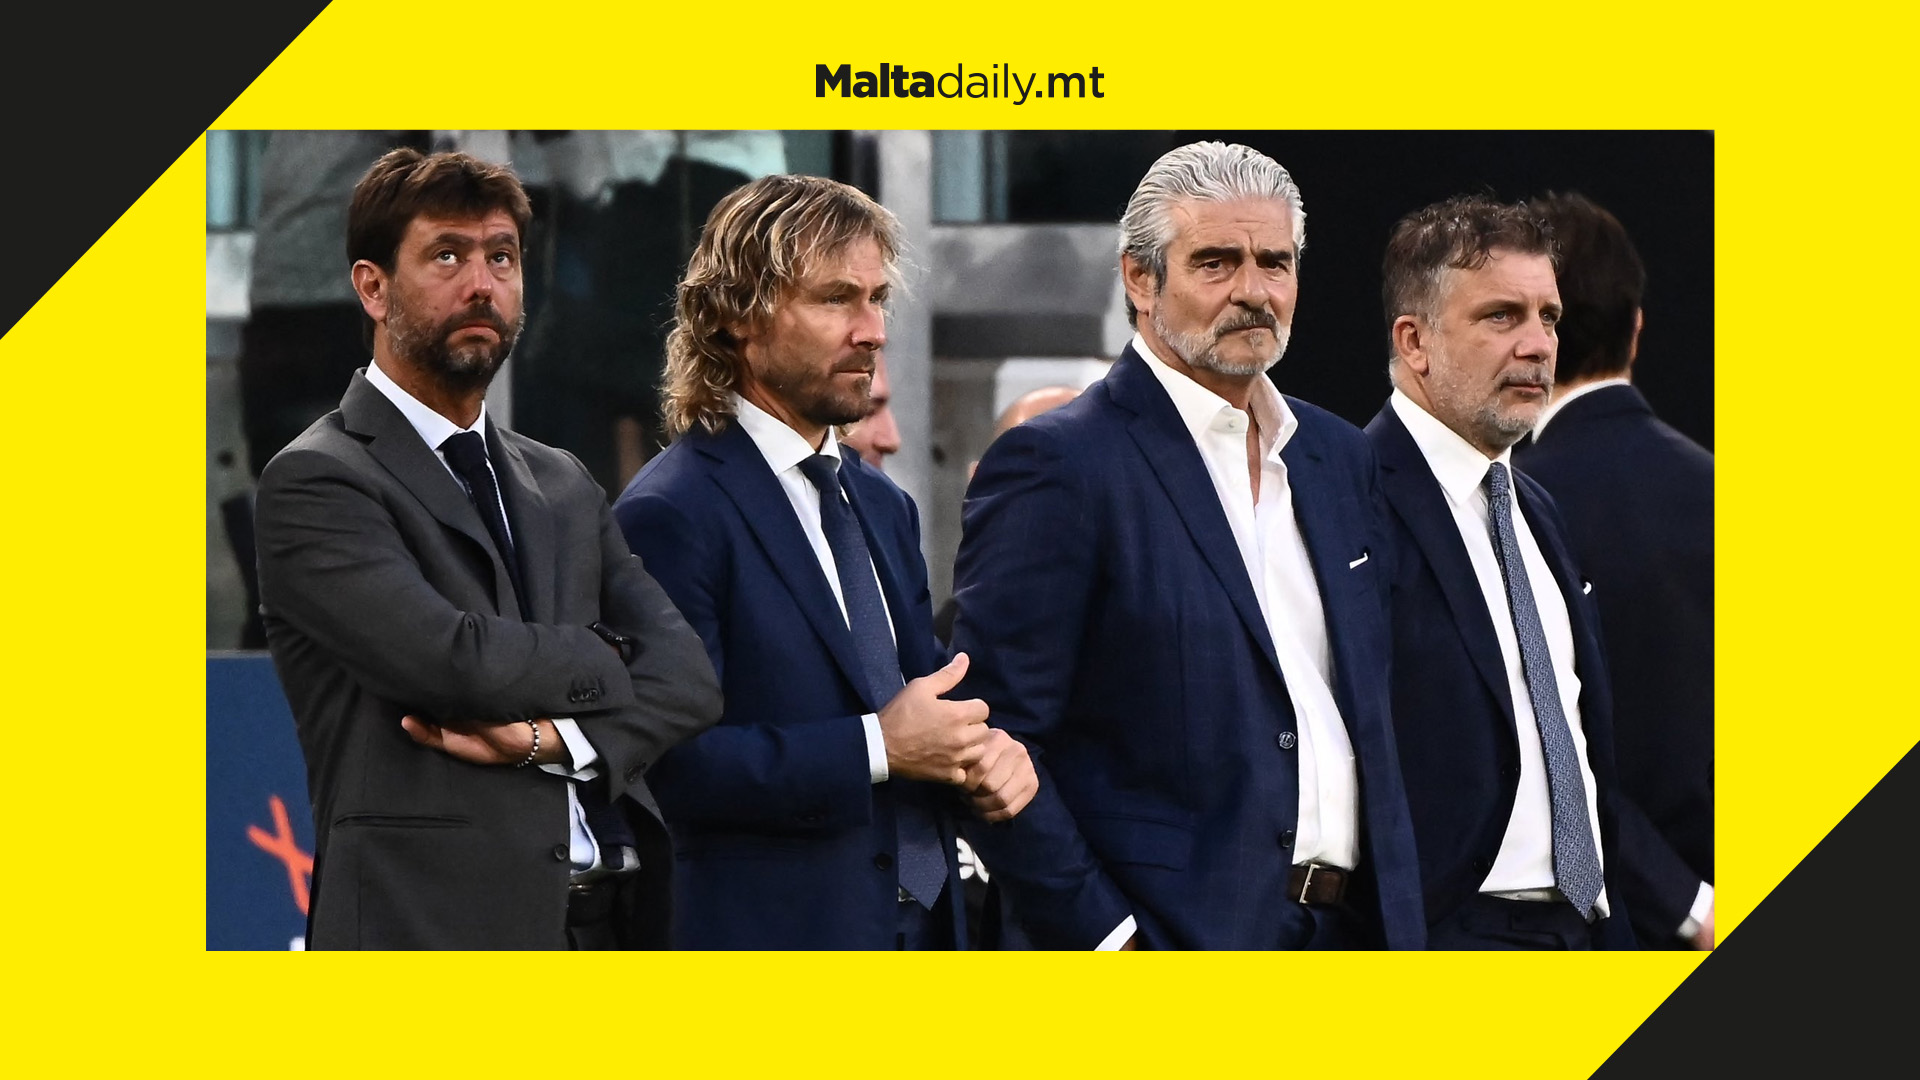 Juventus board shockingly resigns en masse amid financial corruption allegations